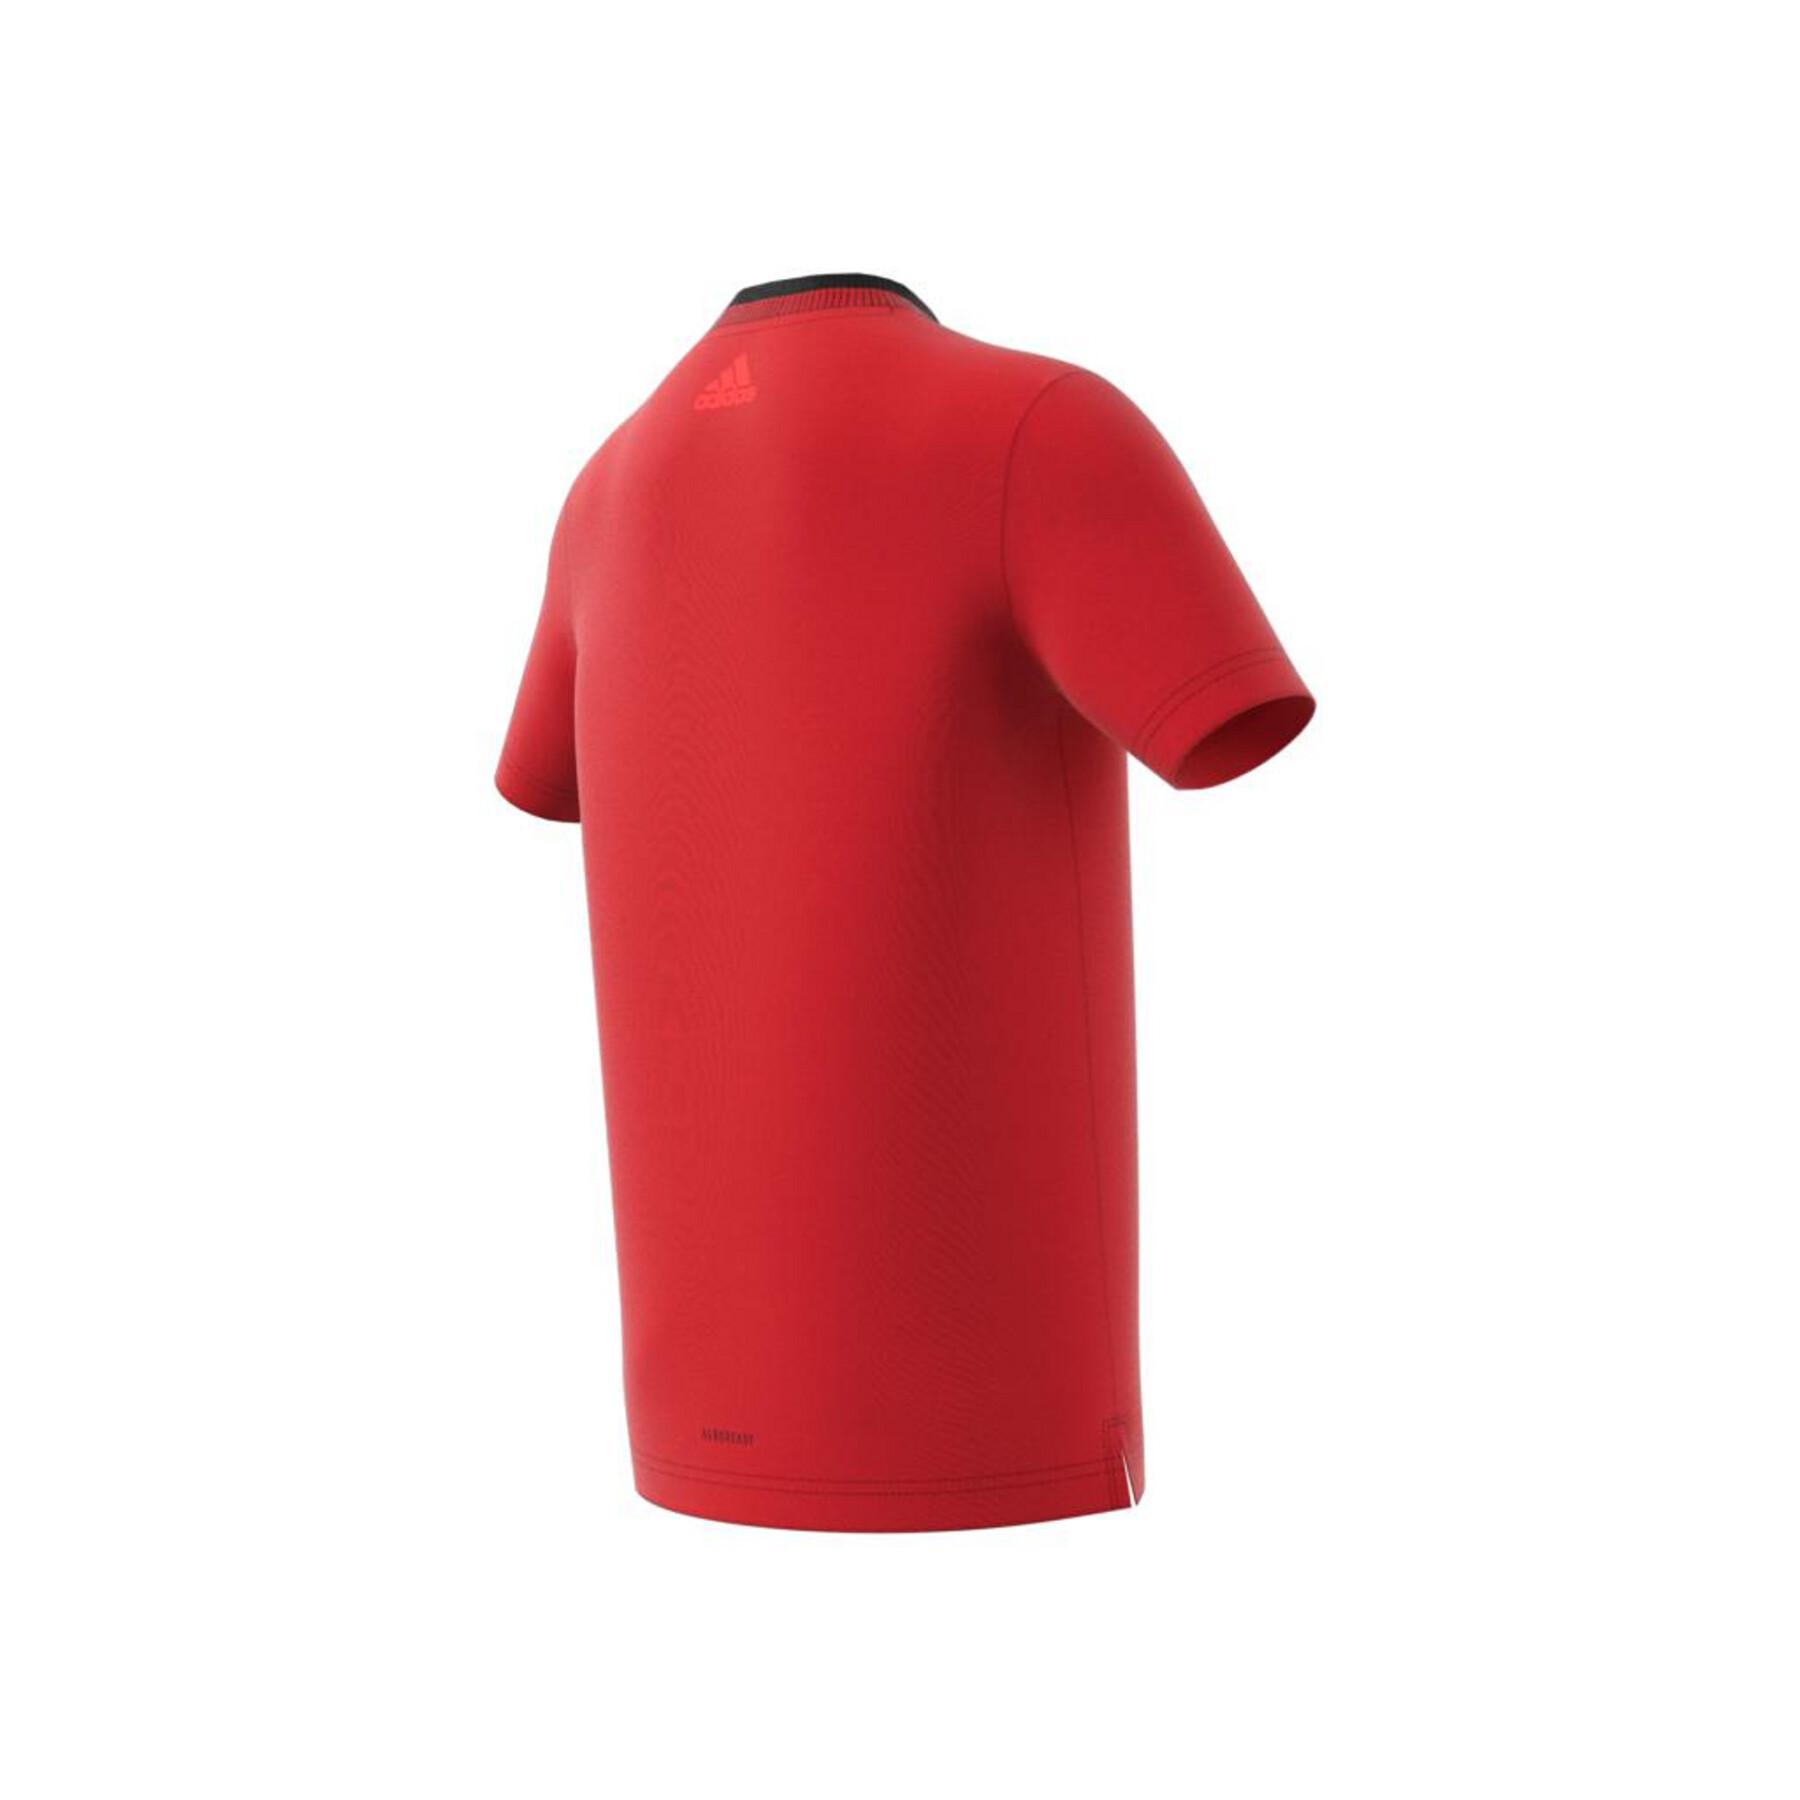 Camiseta de niño adidas AEROREADY X Football-Inspired